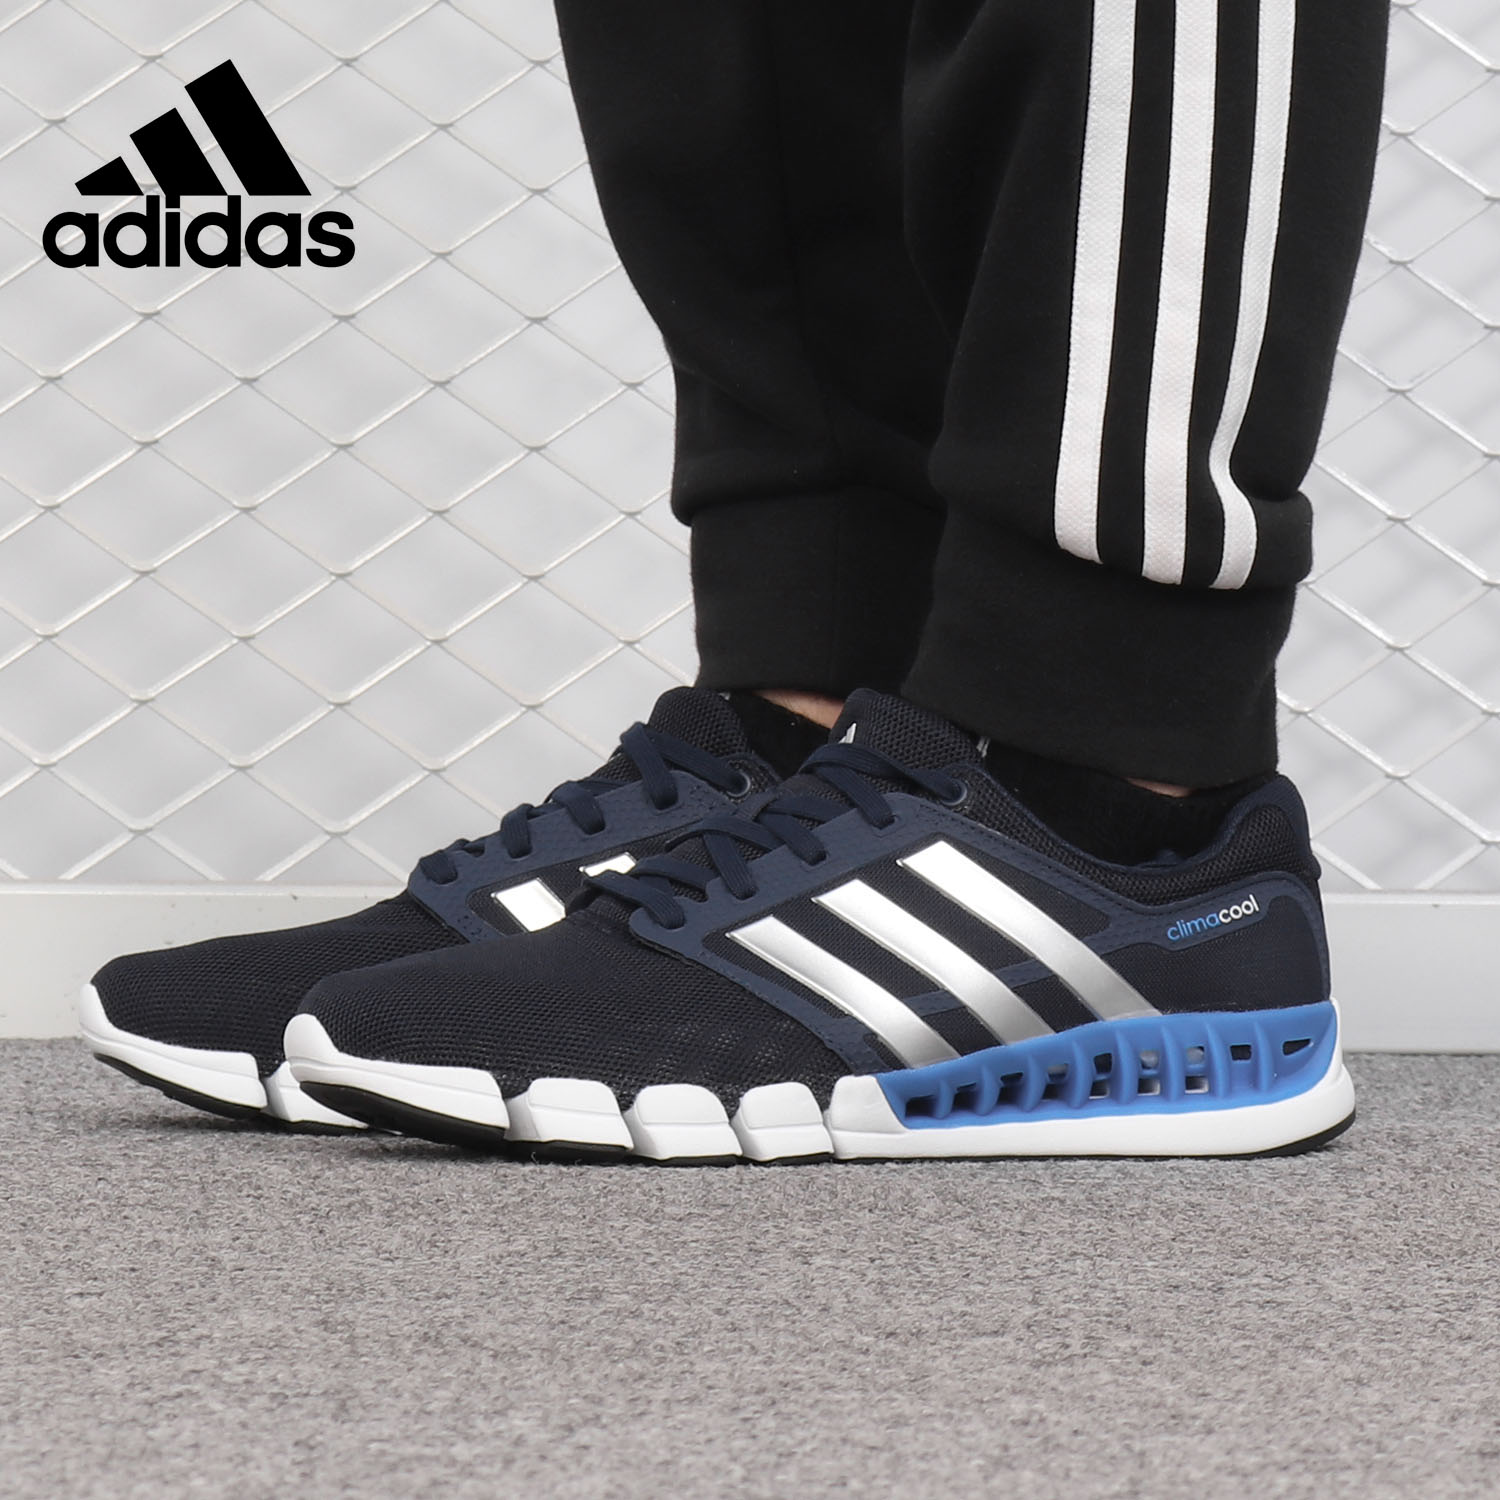 Adidas/阿迪达斯正品 男鞋2019新款 网面透气清风鞋跑步鞋 EF2662